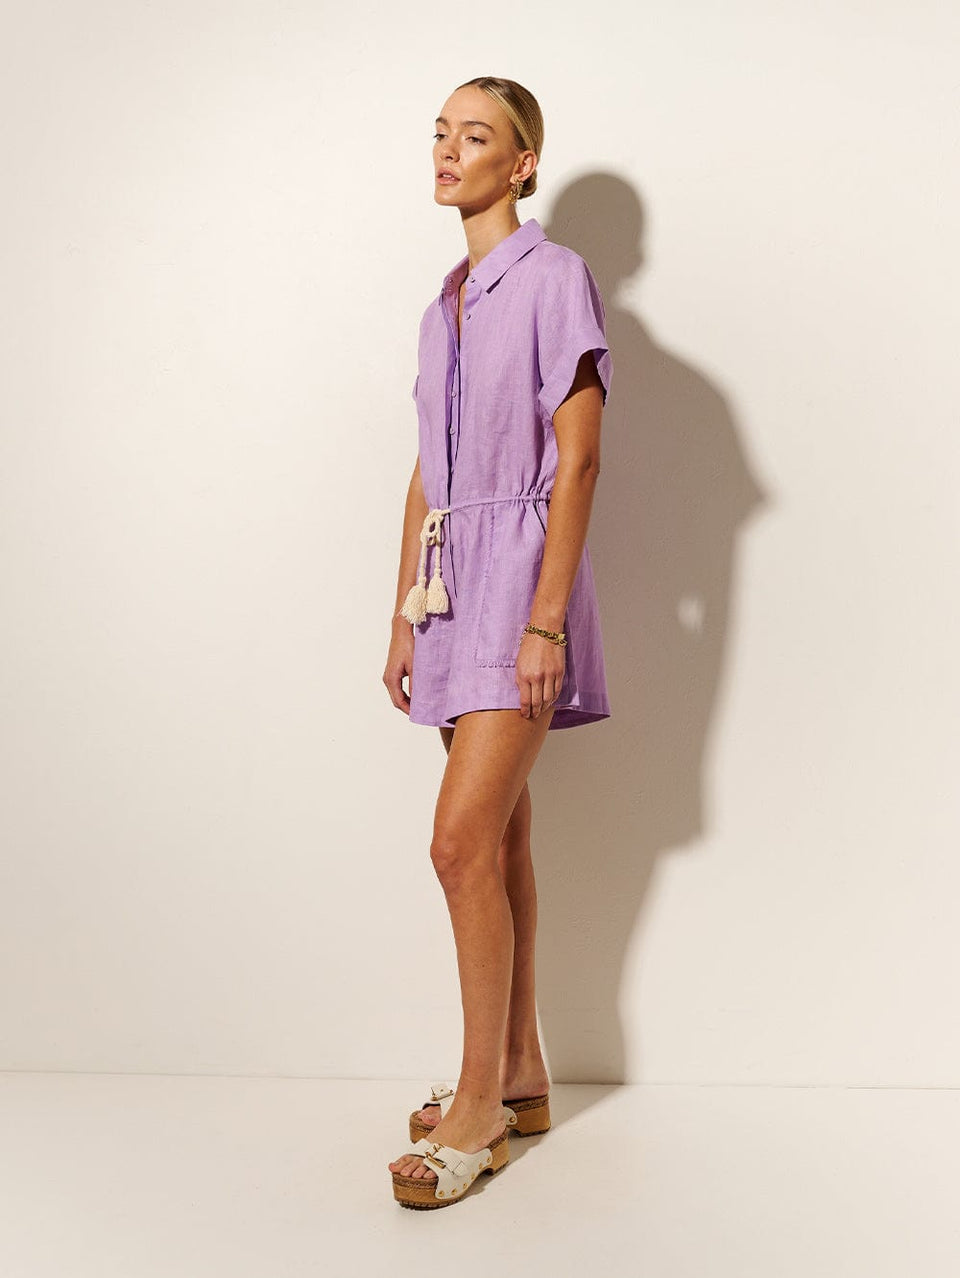 Tully Playsuit KIVARI | Model wears lilac purple playsuit side view